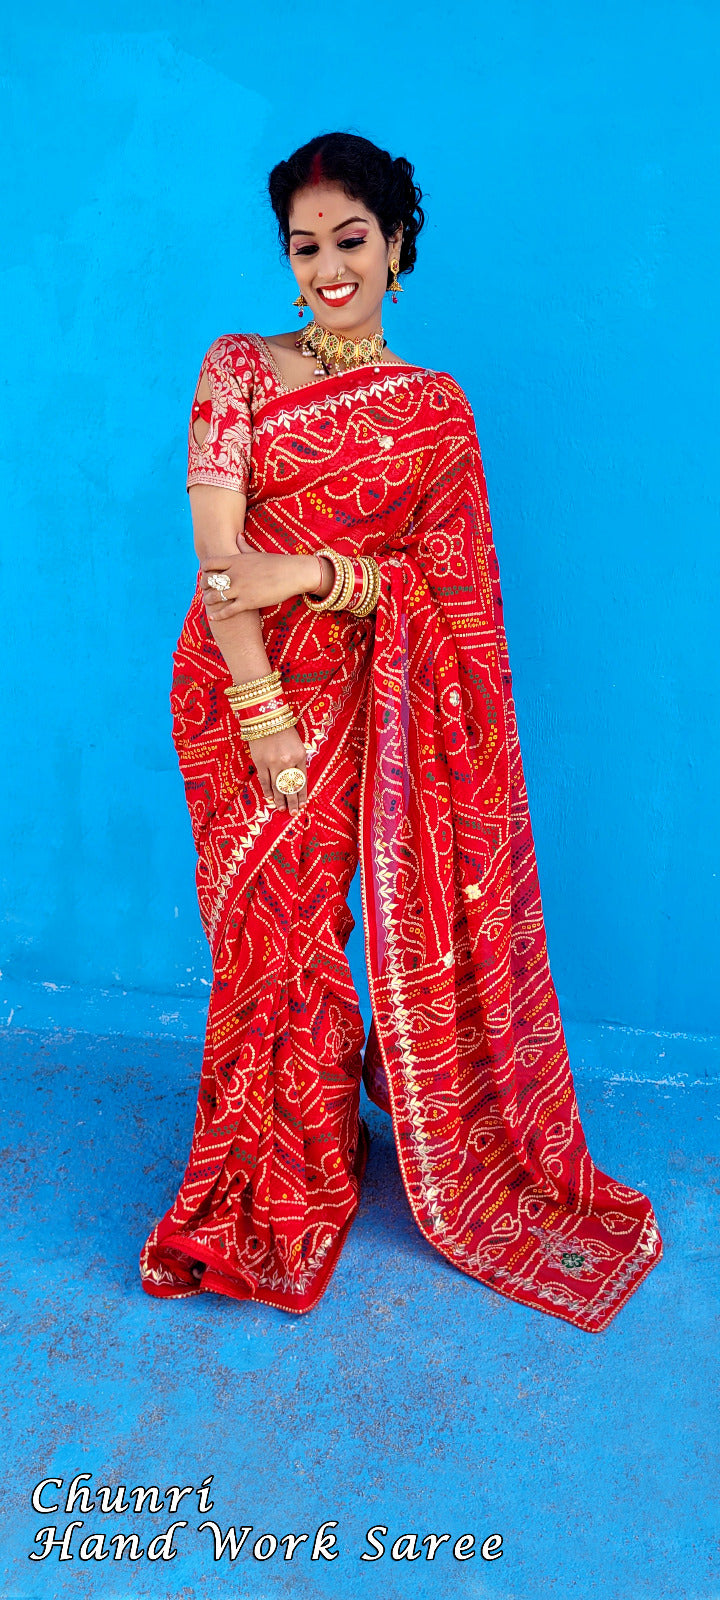 PEACH PINK LEHENGA Choli Lengha Chunri Party Wear Indian Skirt Top Sari  Saree $51.90 - PicClick